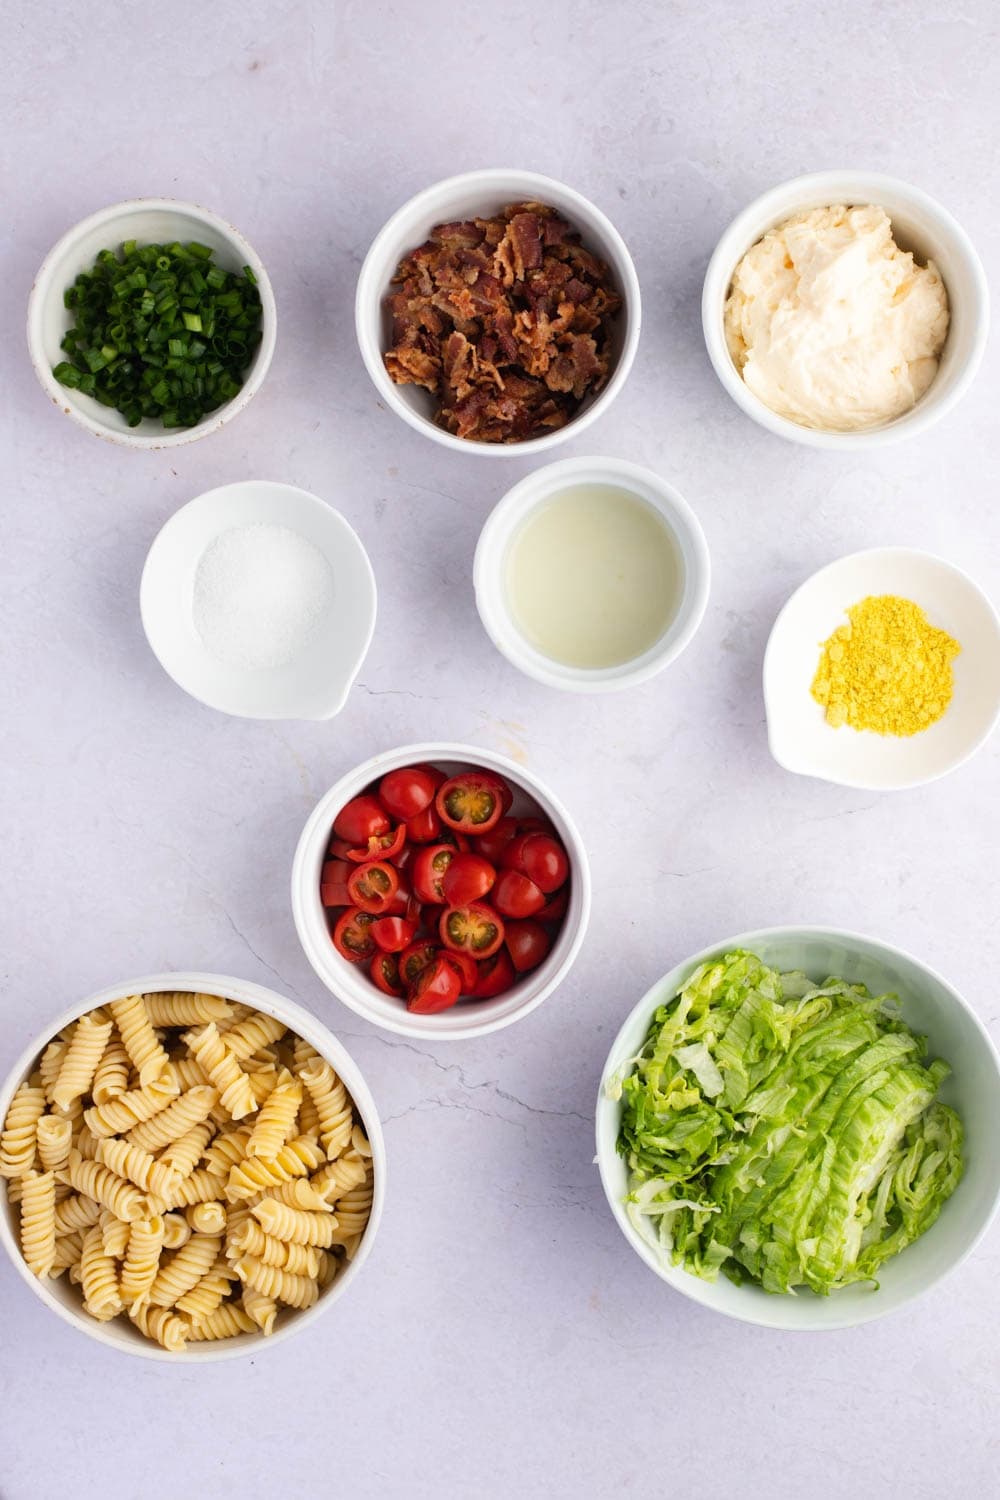 BLT Pasta Salad Ingredients: Mayonnaise, Lemon, Juice, Sugar, Chicken, Flavored Bouillon, Pasta, Bacon, Tomato, Green Onions and Lettuce